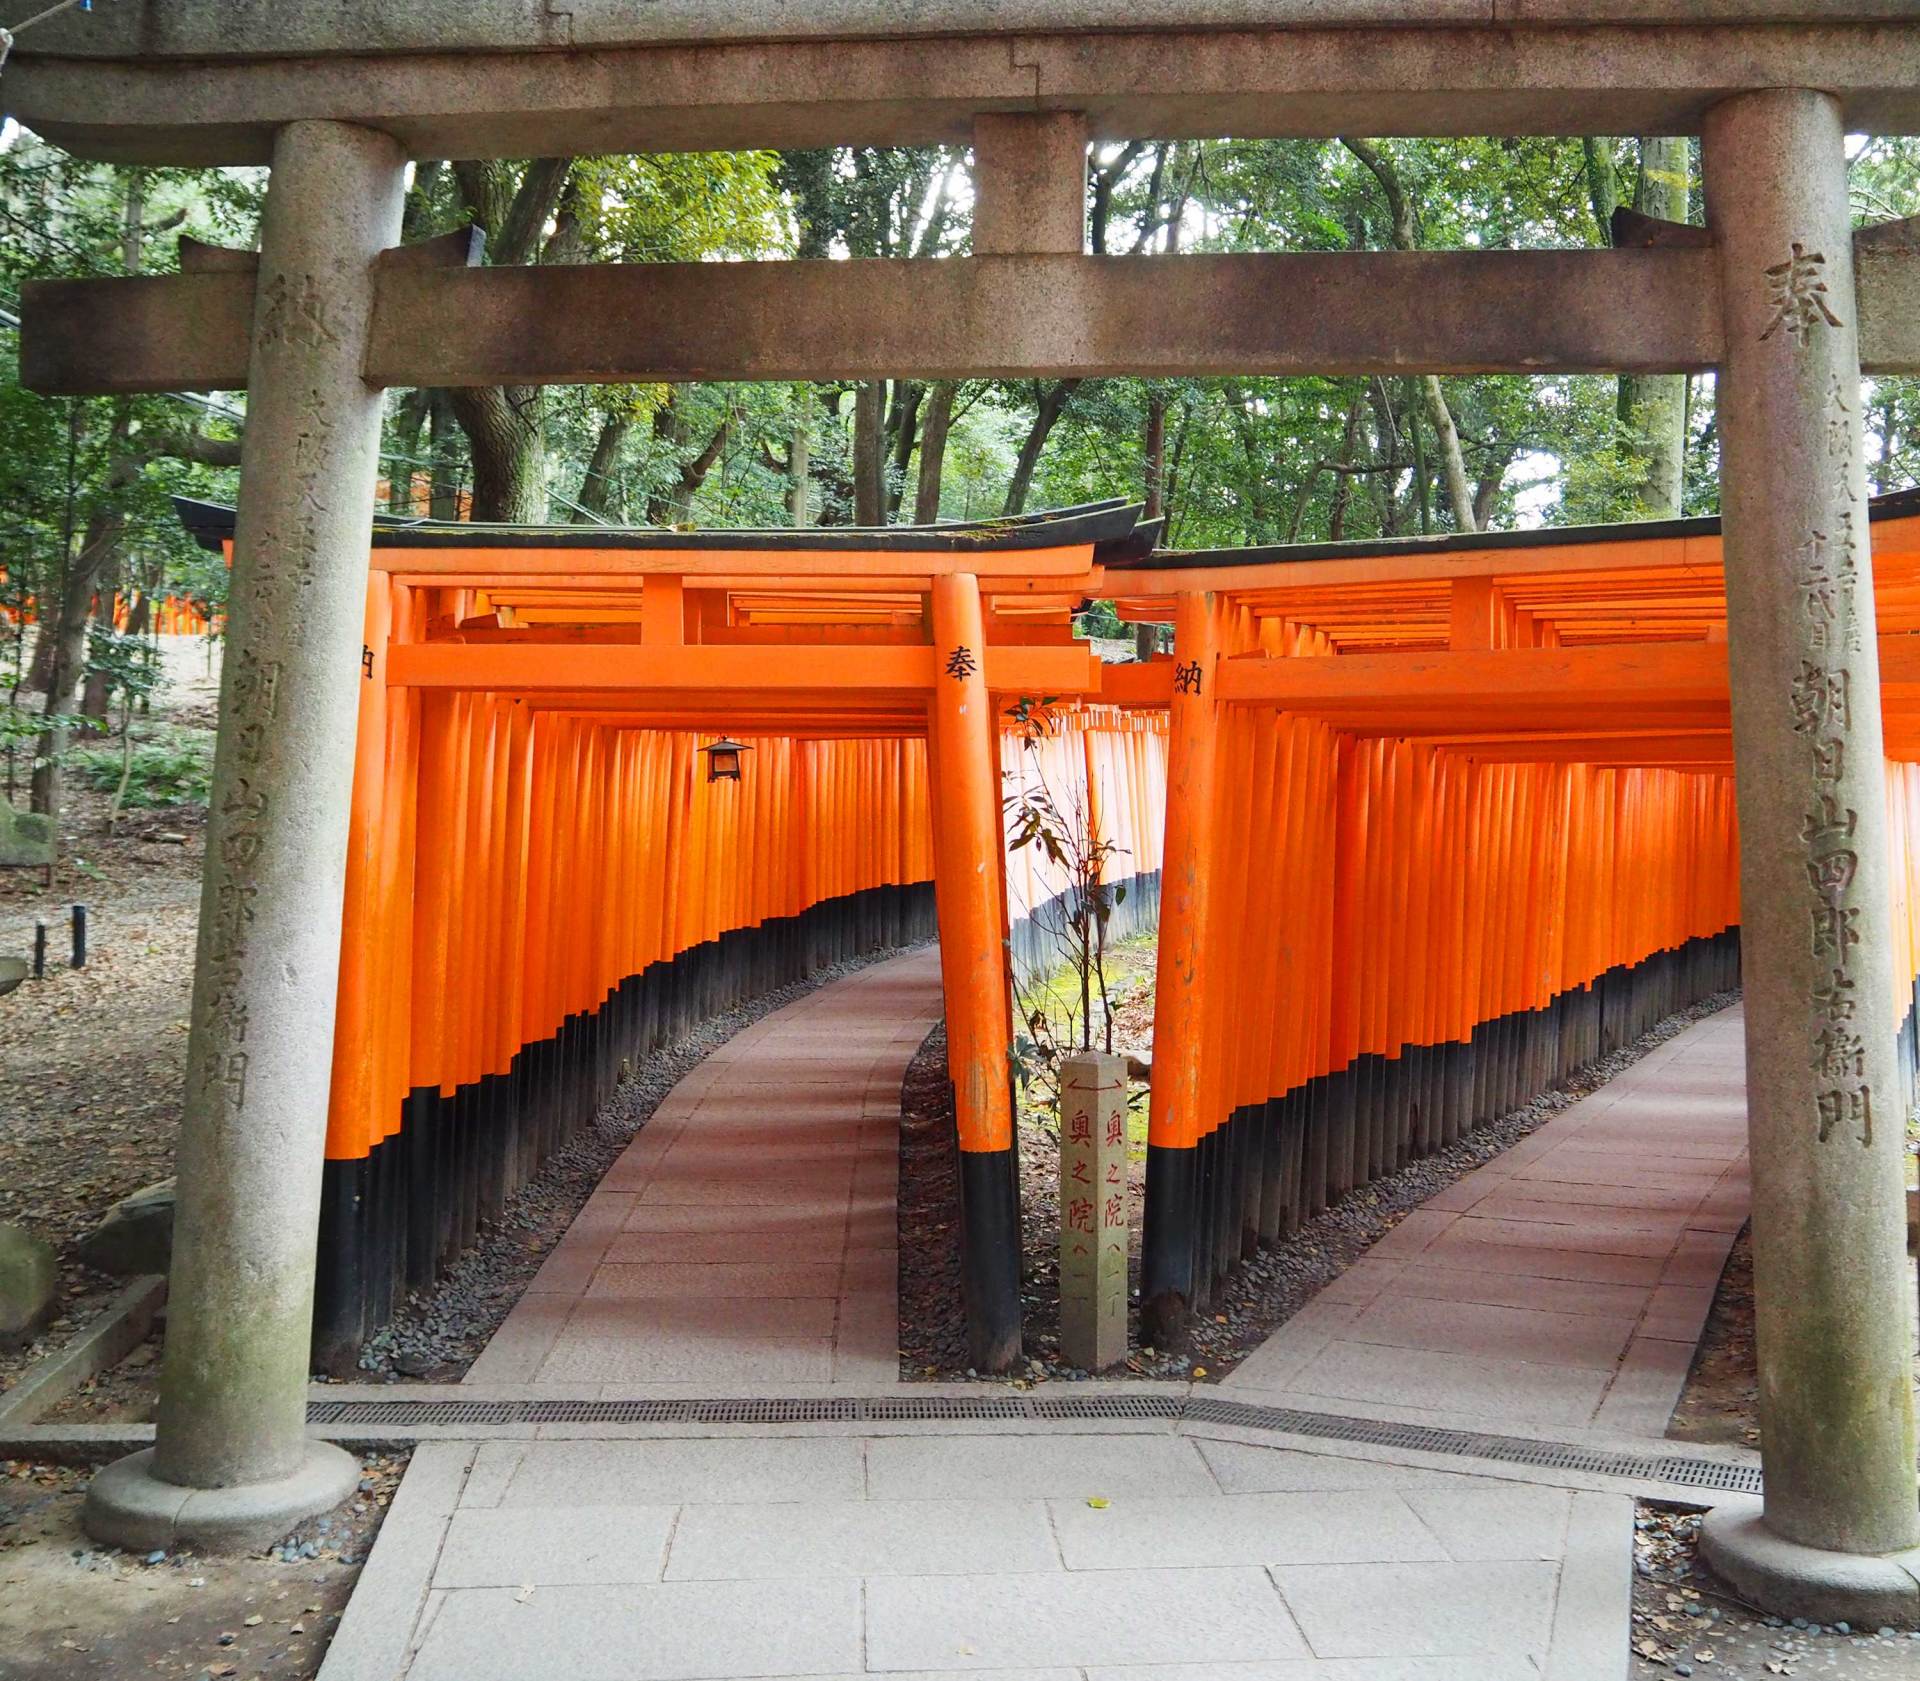 The Torii Gates at Fushimi Inari Shrine